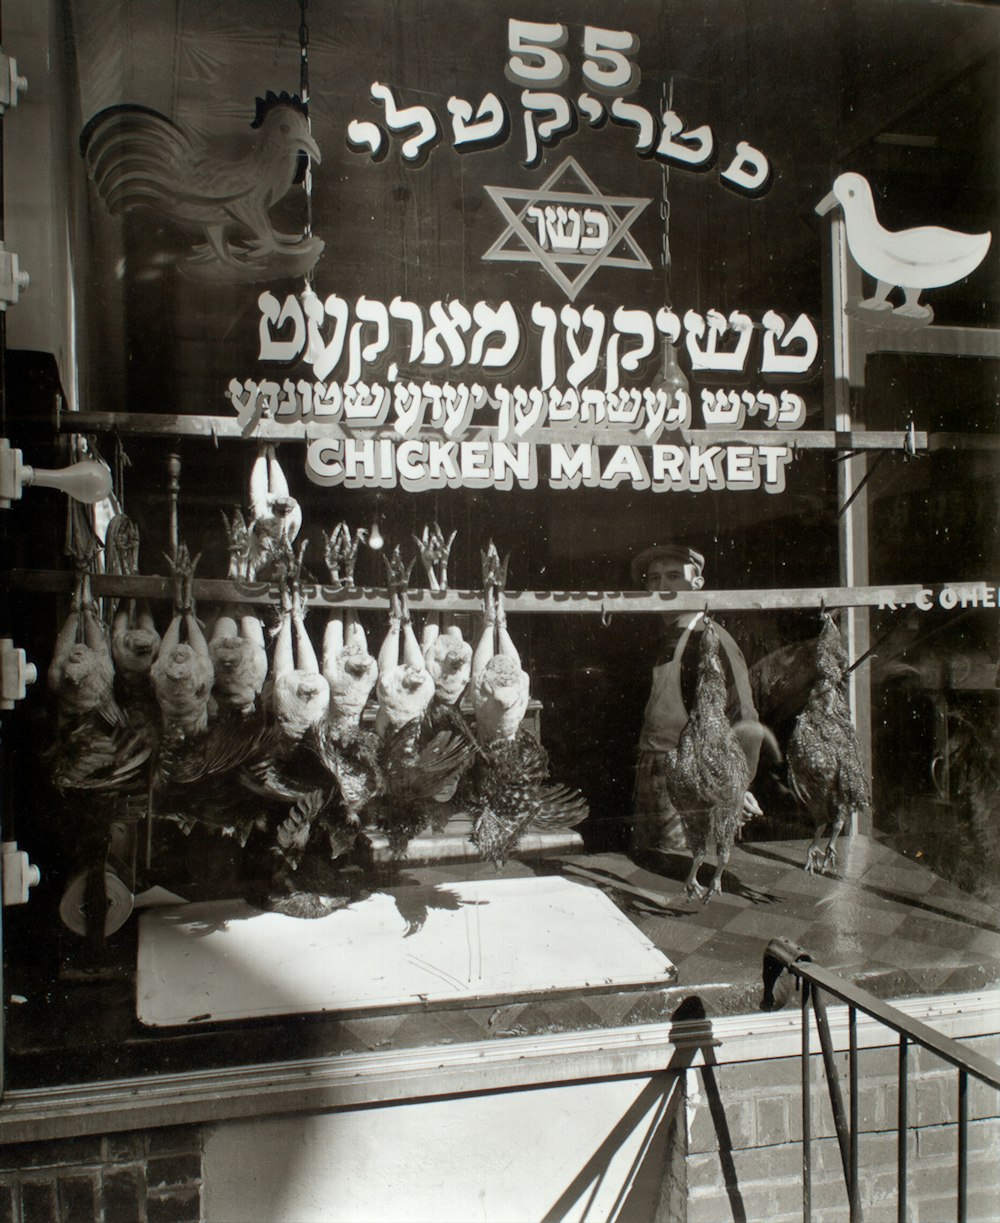 greyscale image of chicken market store window